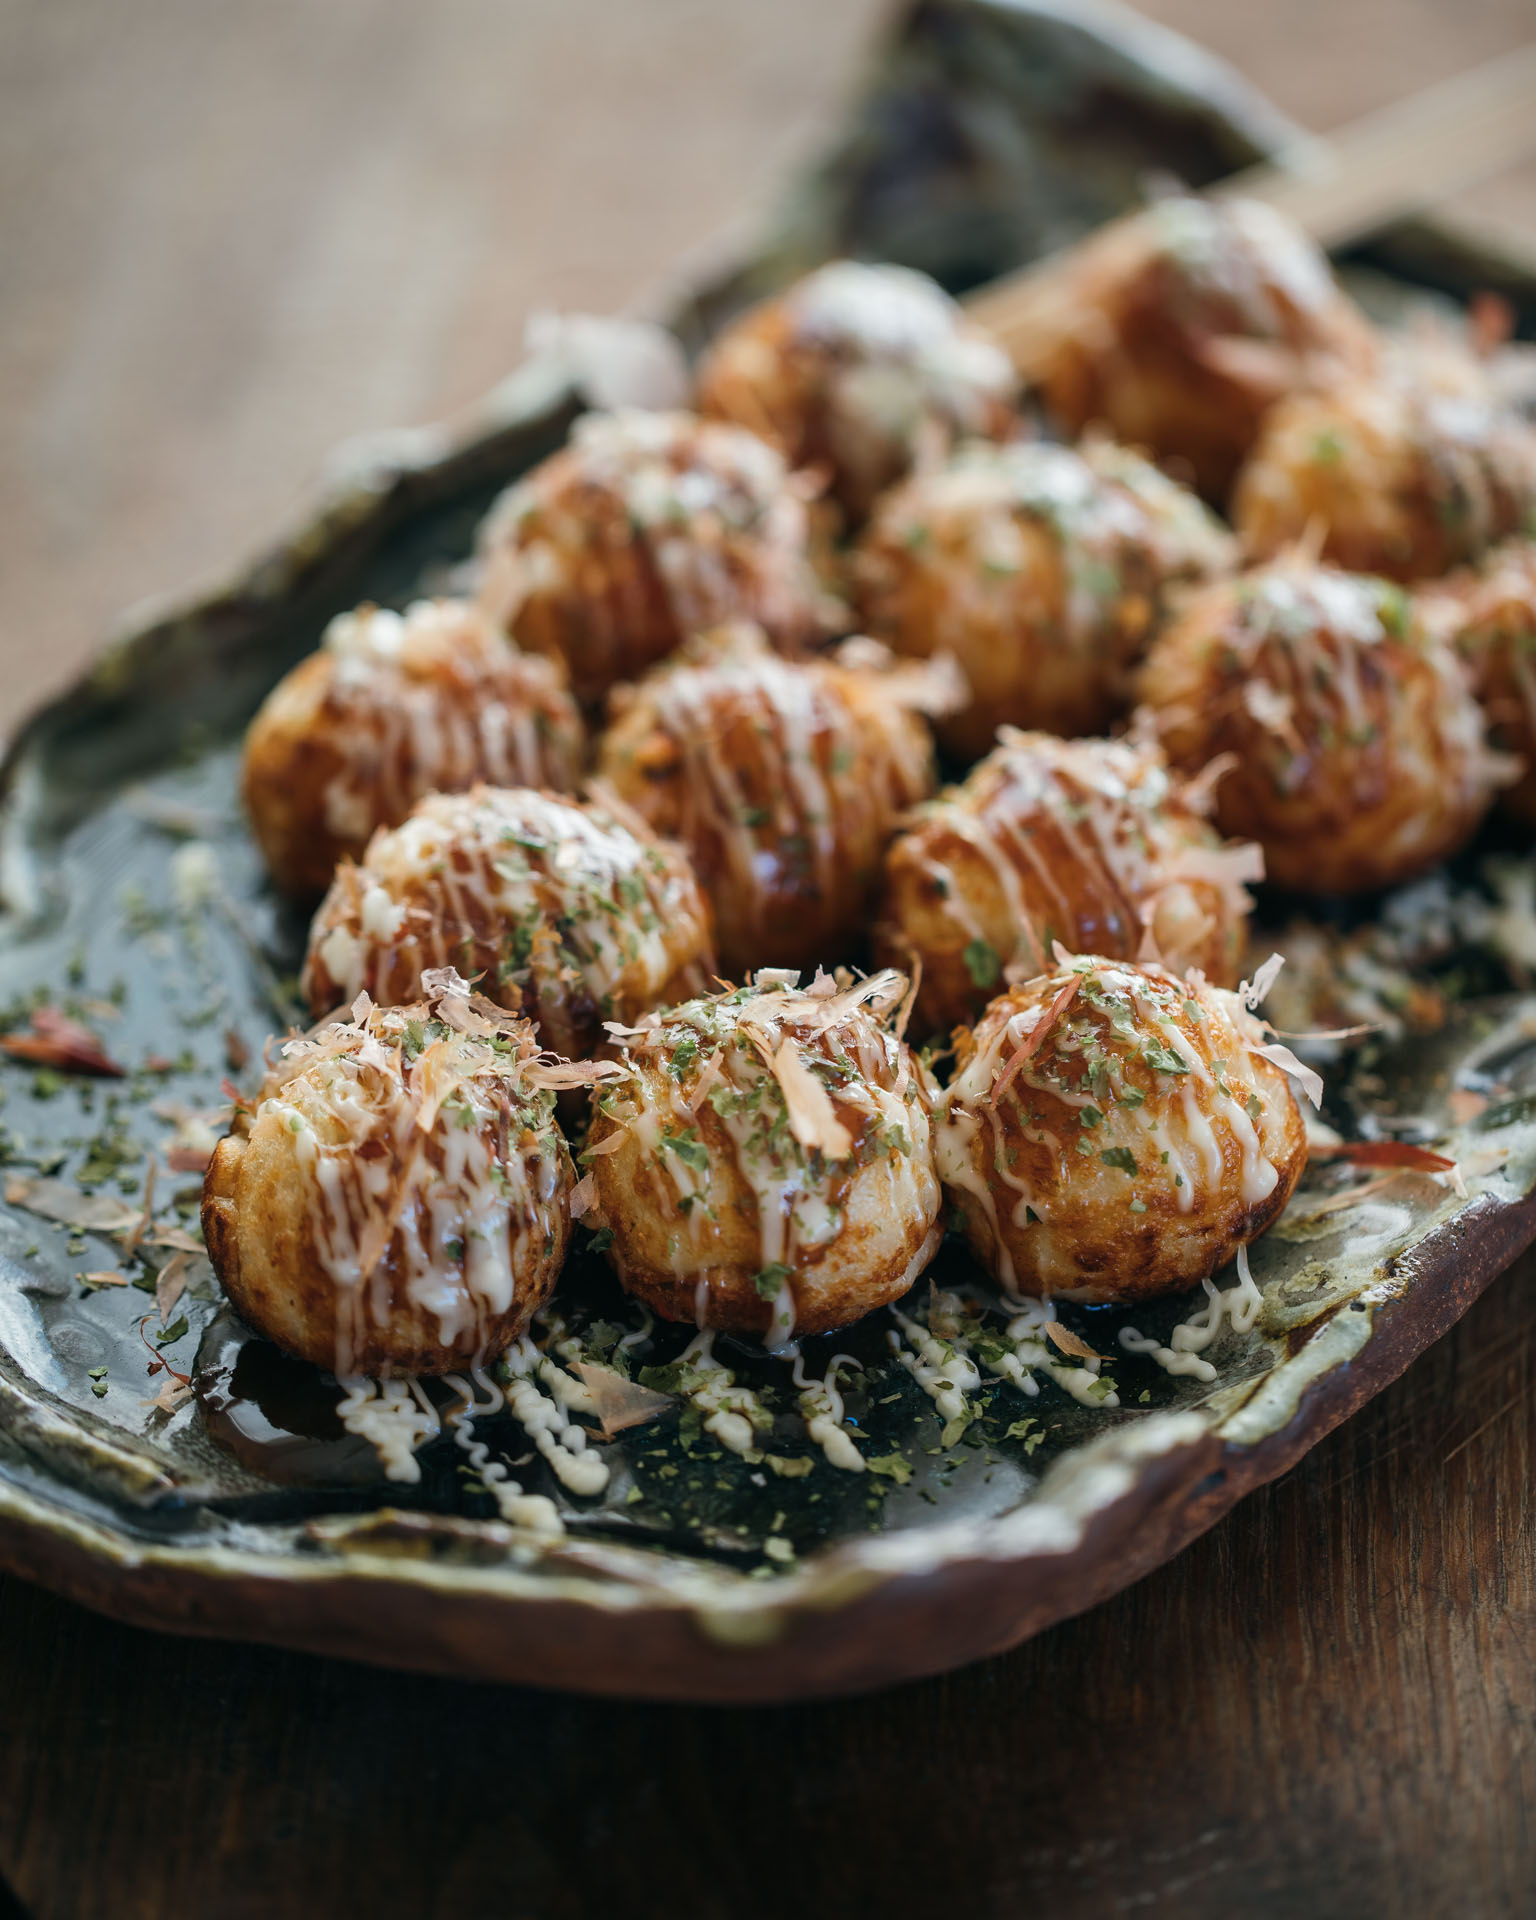 Gindaco Takoyaki - Balls of Dough Filled with Octopus Lava